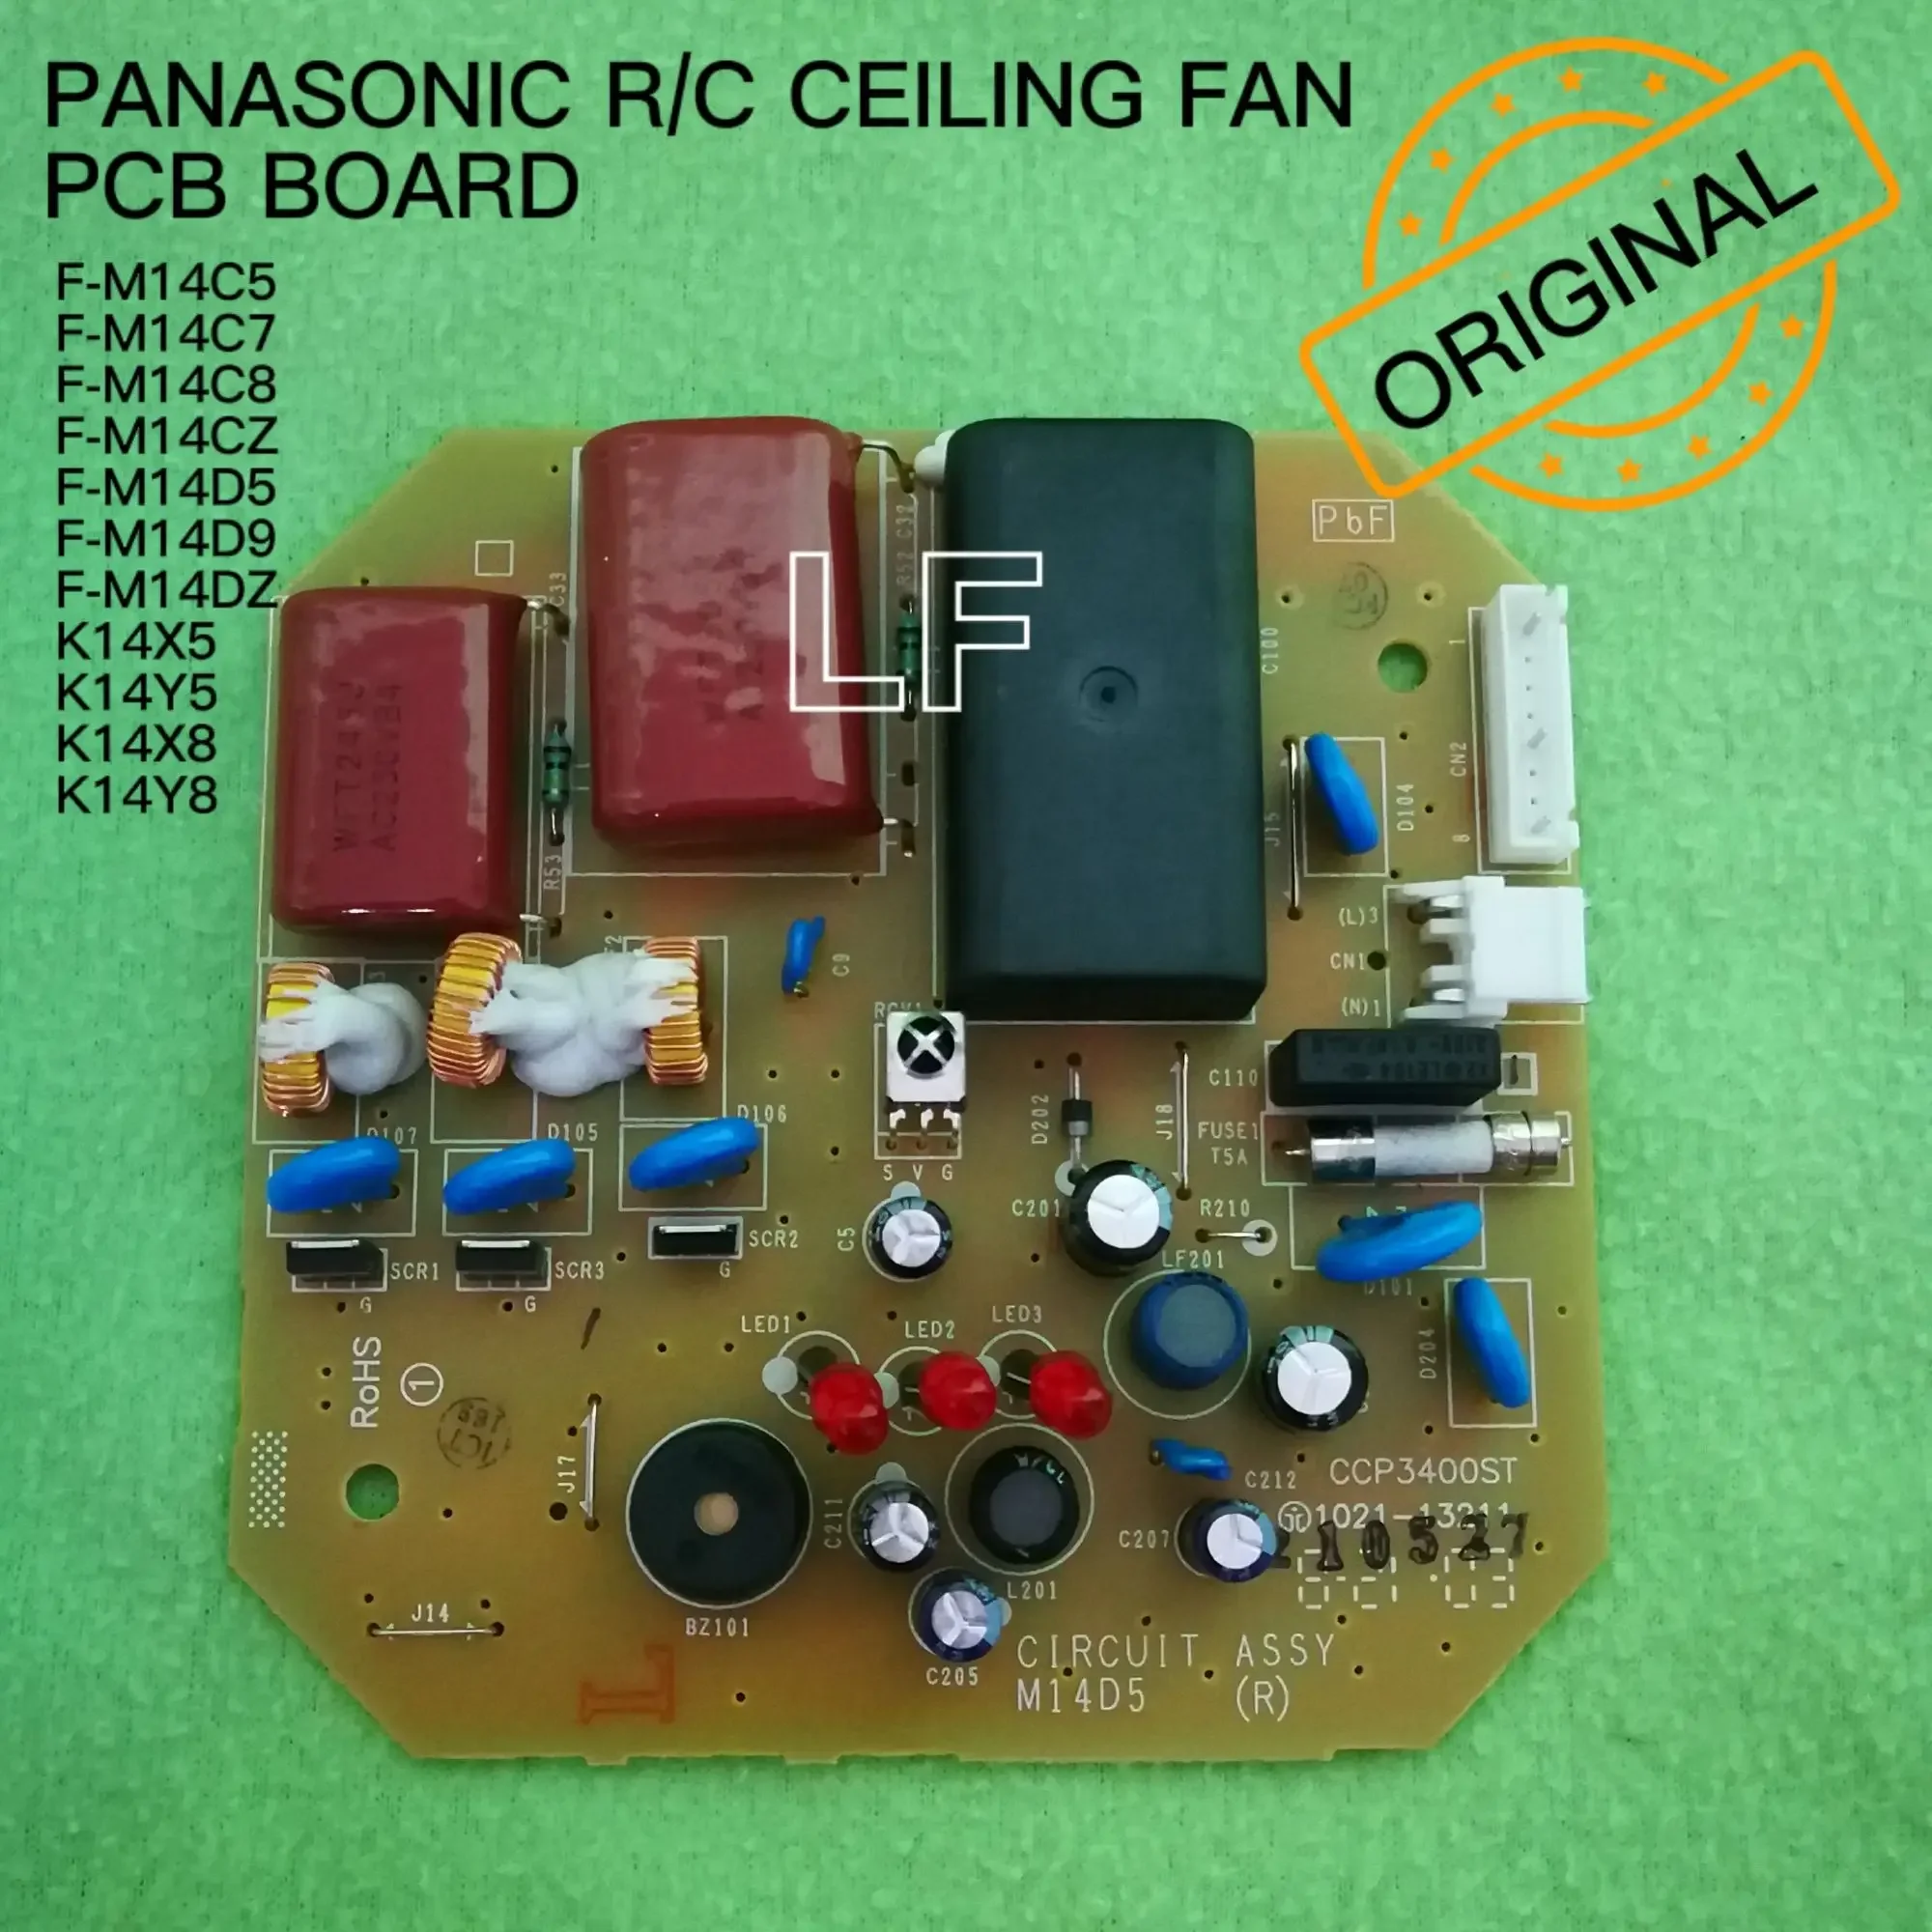 PANASONIC / KDK CEILING FAN PCB BOARD ORIGINAL F-M14C7 / F-M14D5 / F-M14D9 / F-M14C5 / K15Y9 / K14X8